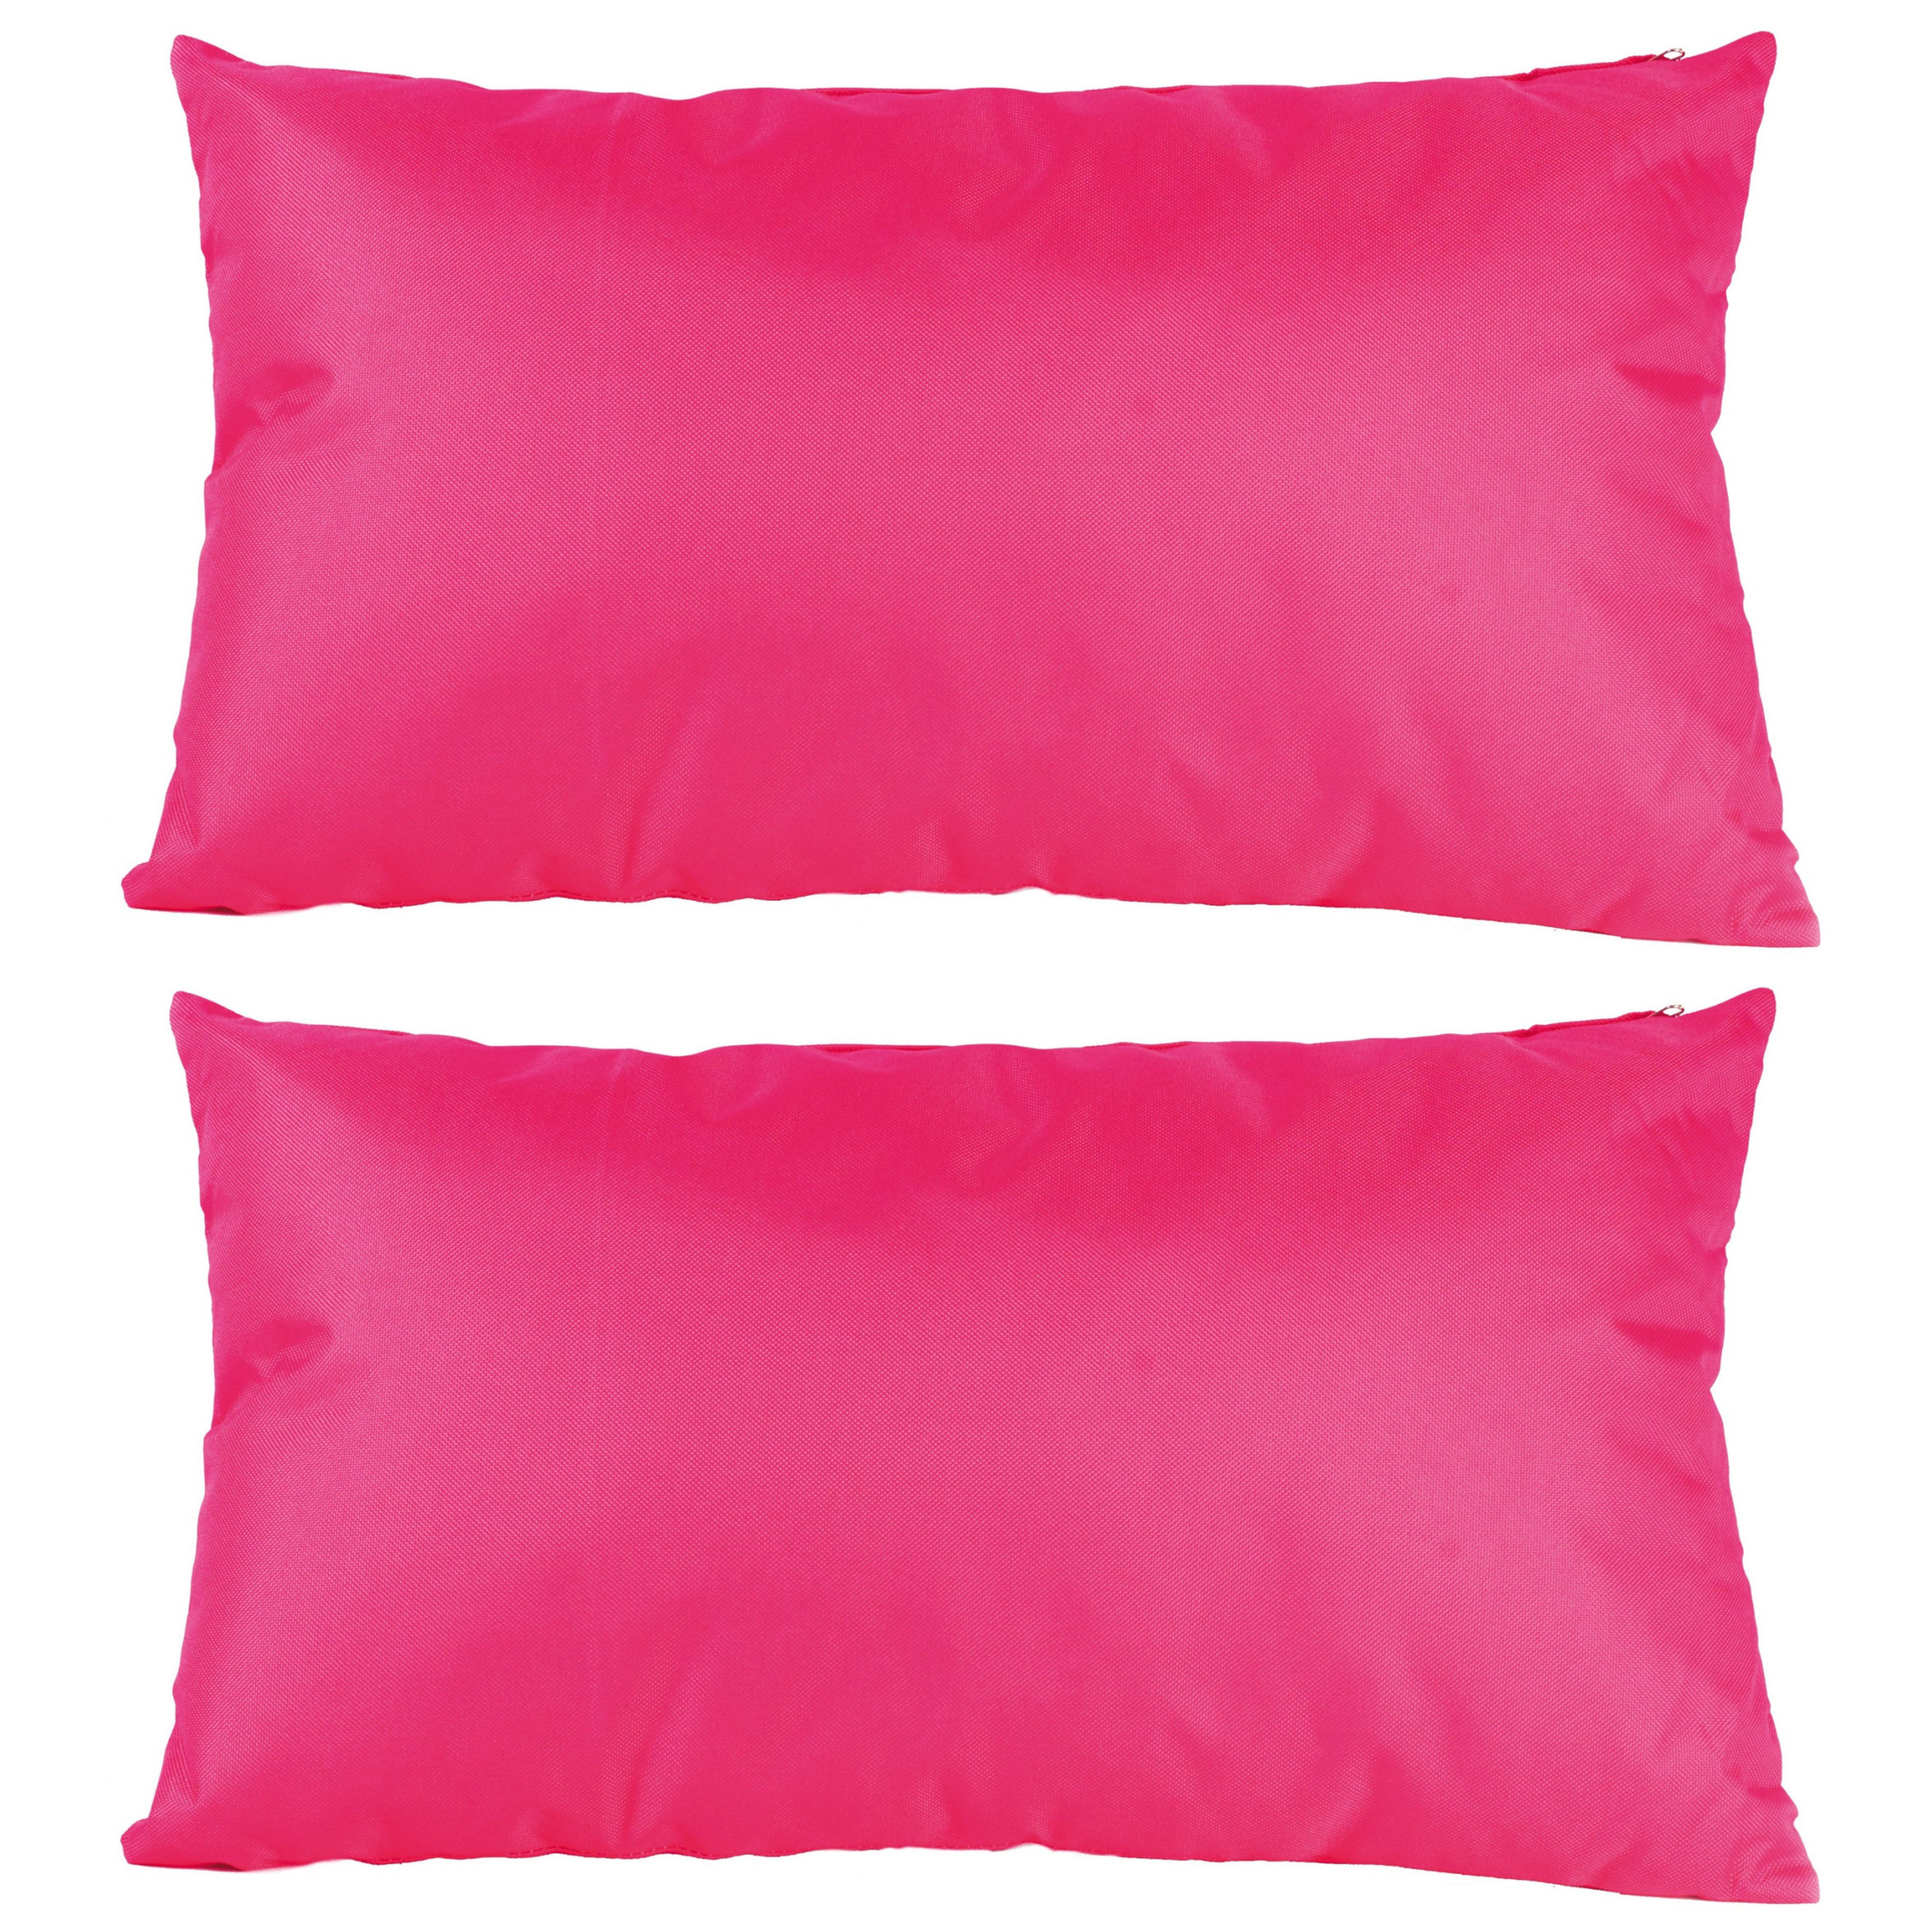 6x Bank-sier kussens voor binnen en buiten in de kleur fuchsia roze 30 x 50 cm